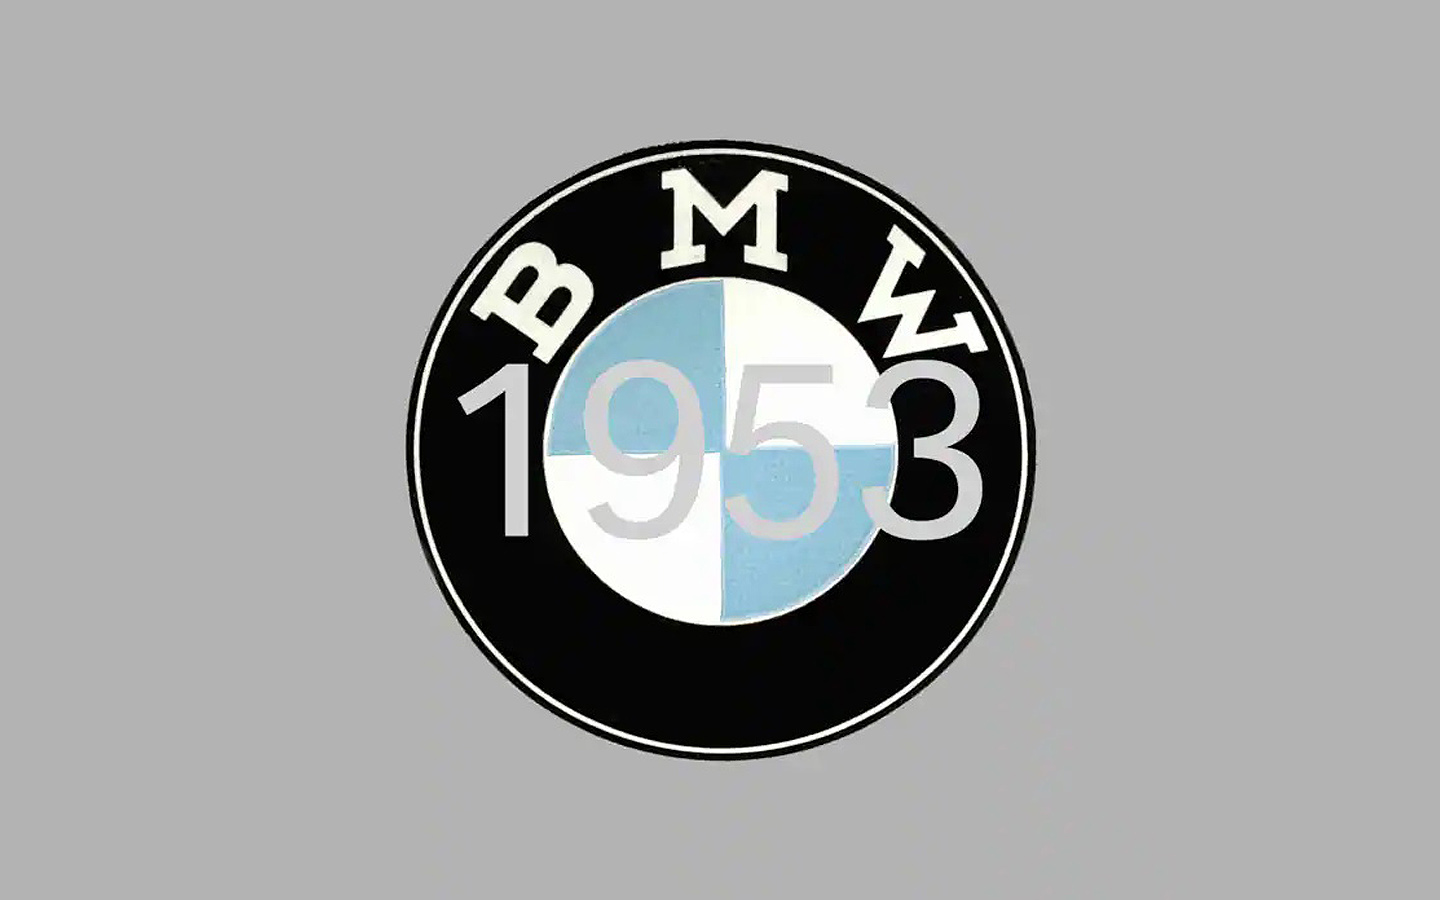 bmw logo history: 1953